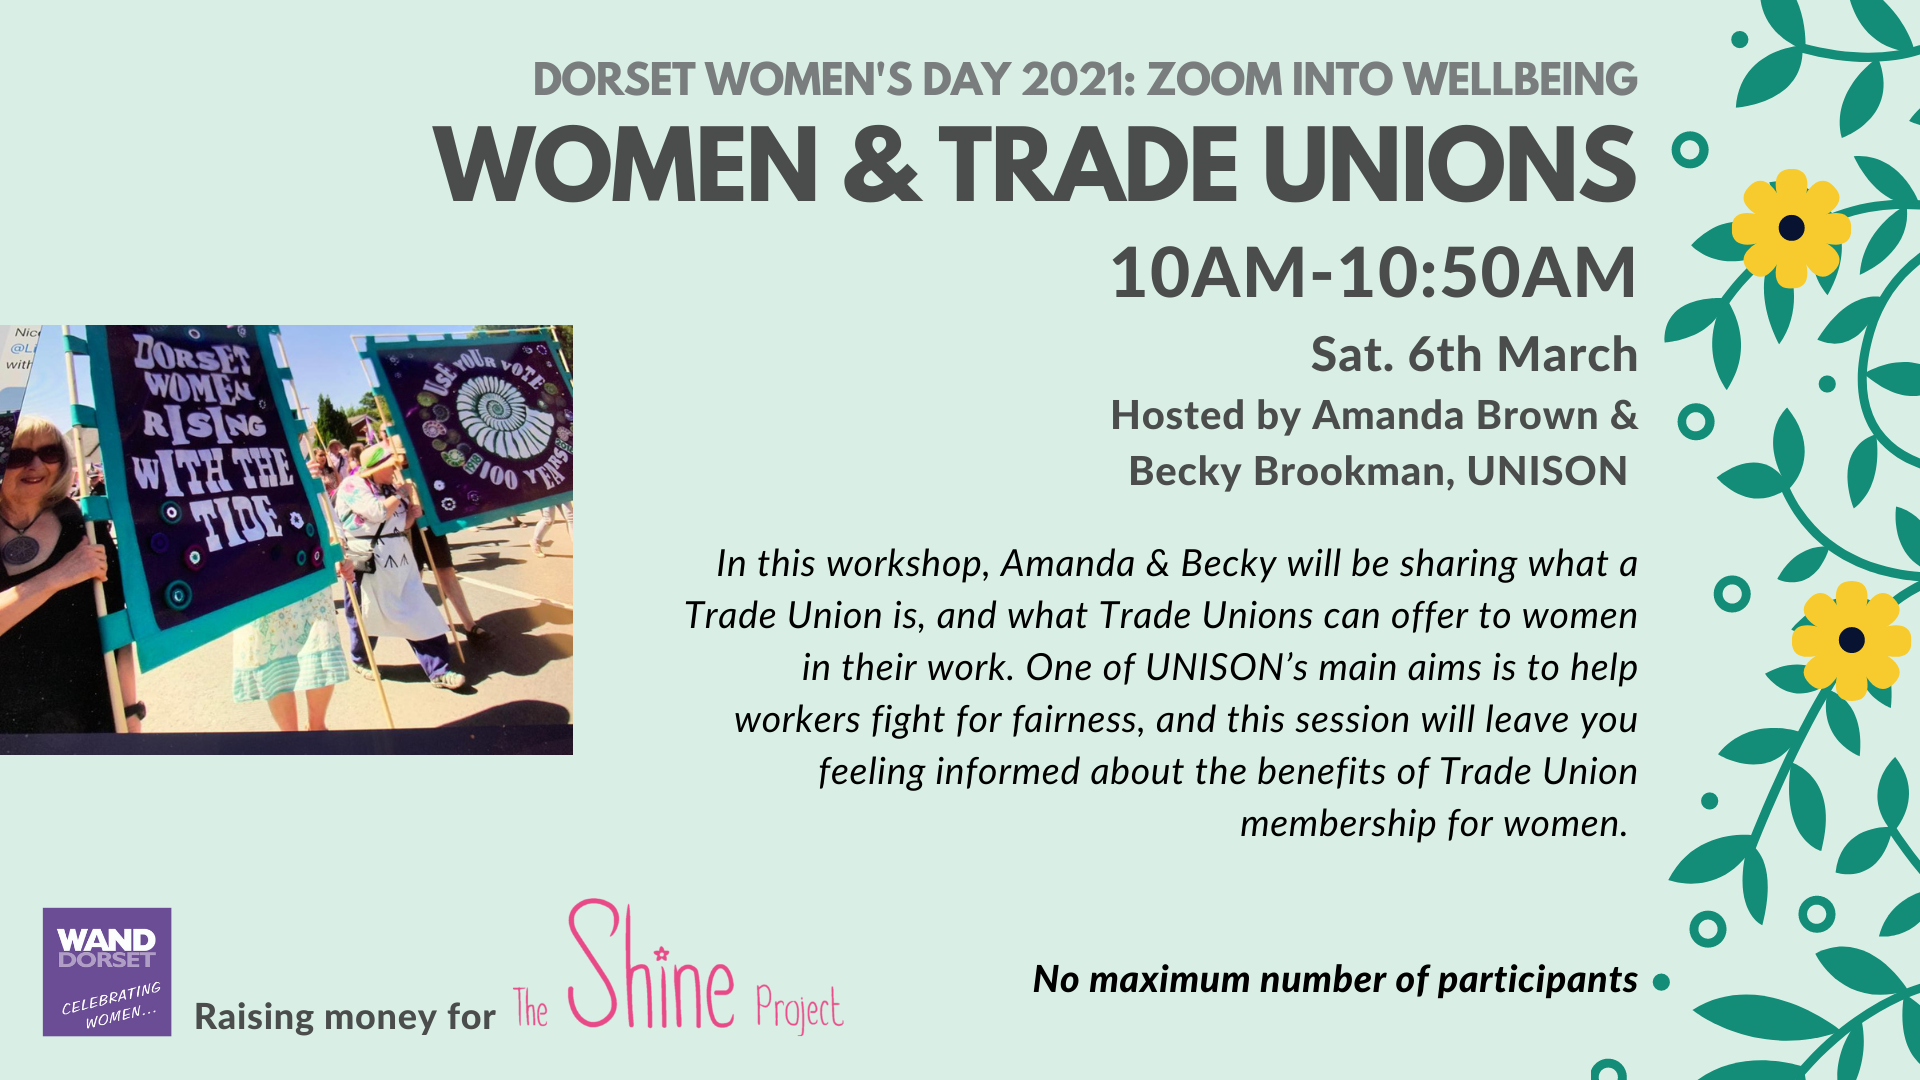 Dorset Women's Day 2021: Women & Trade Unions